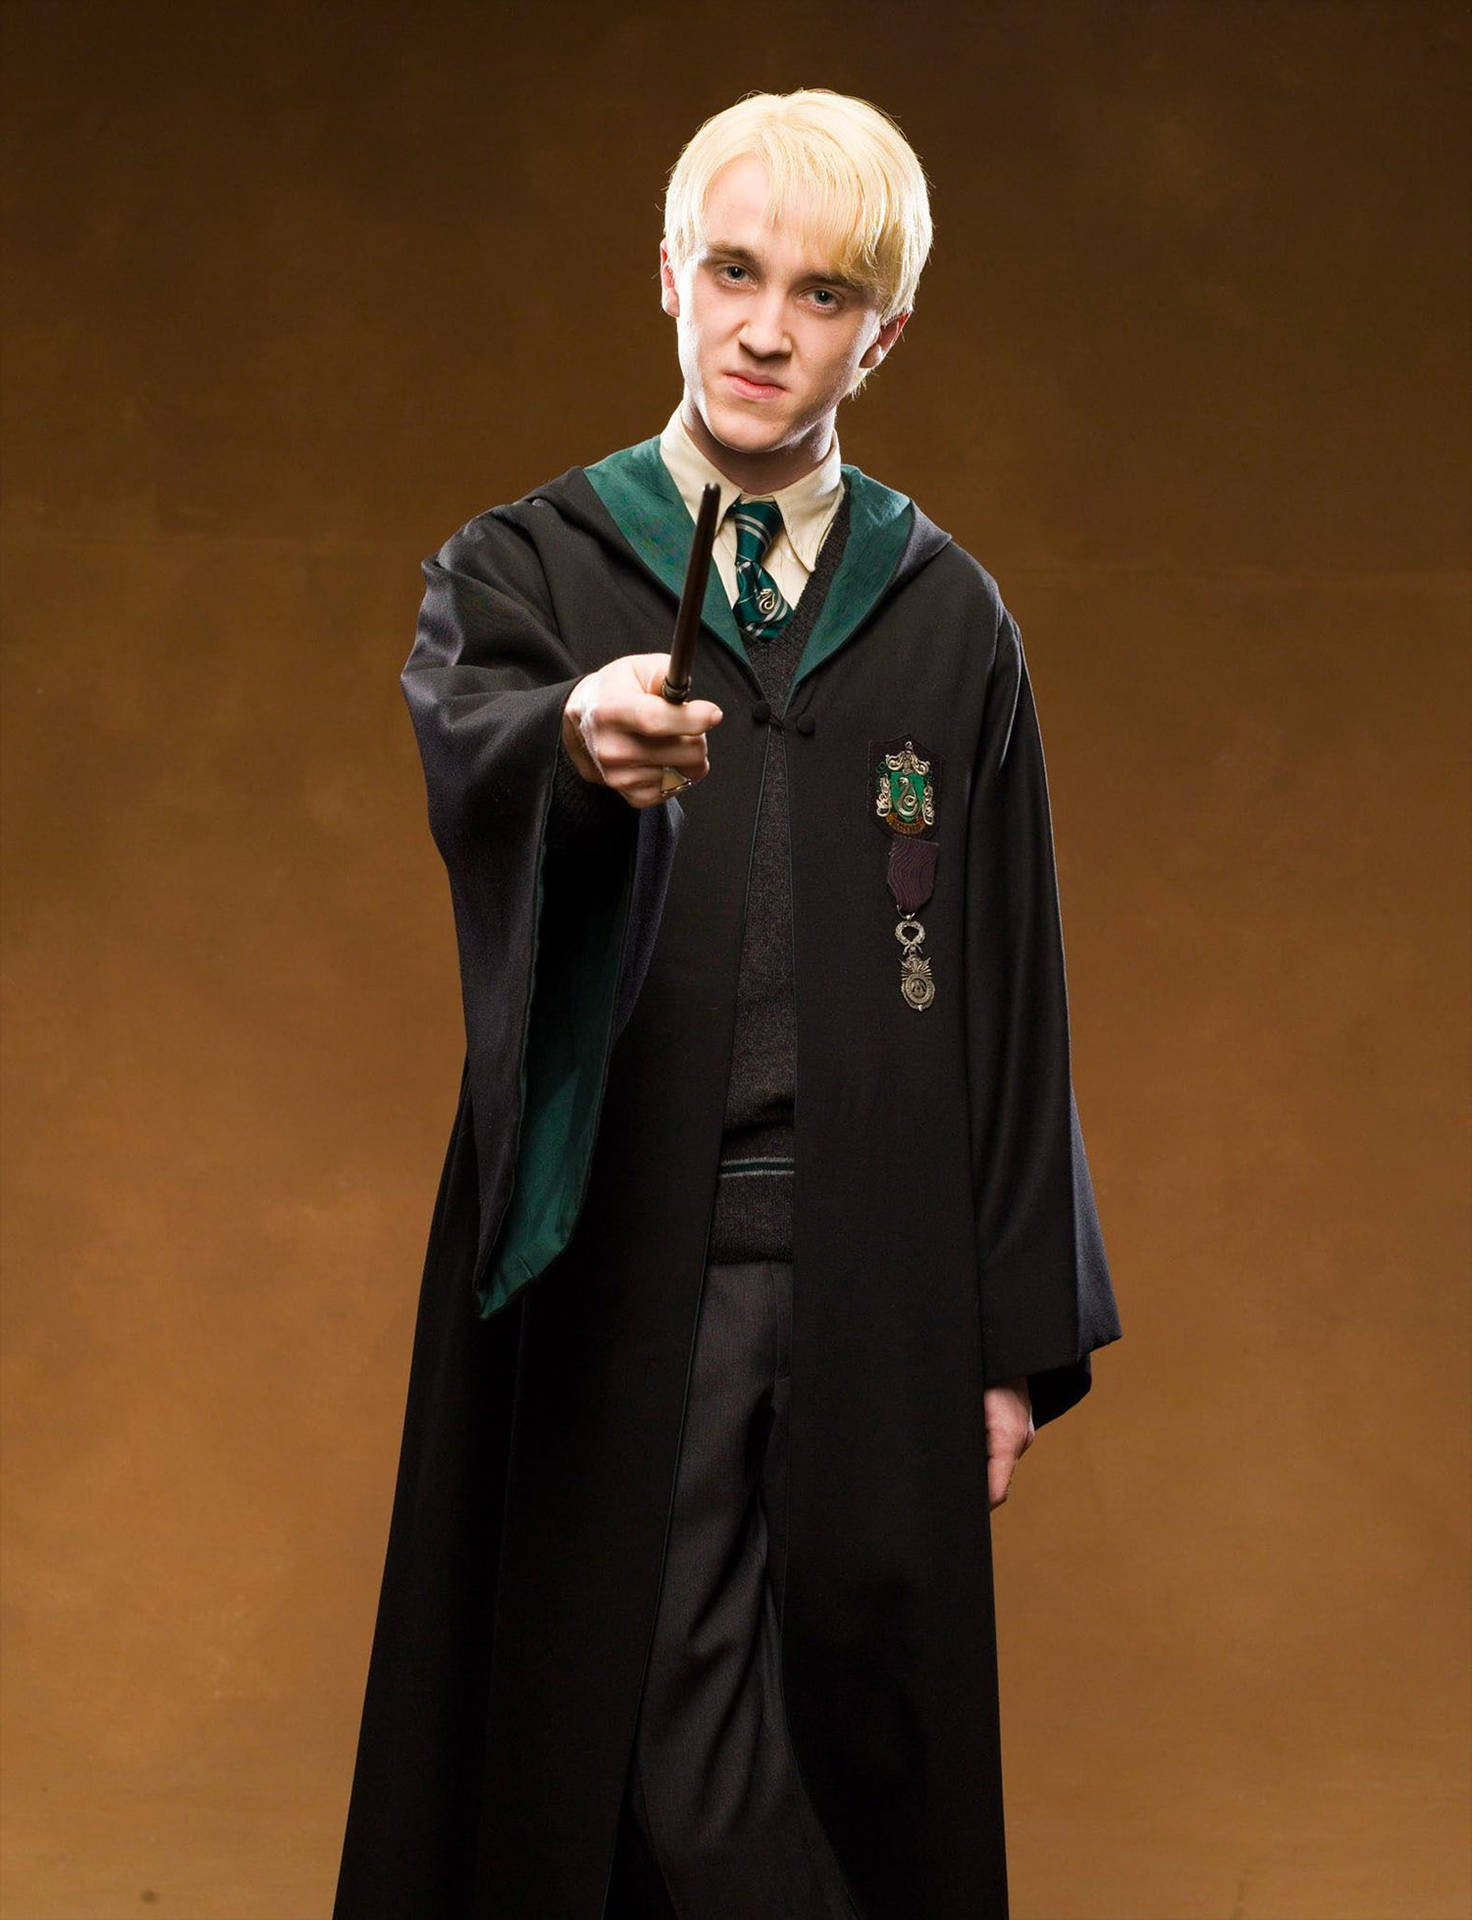 Wizard Draco Malfoy Photoshoot Background